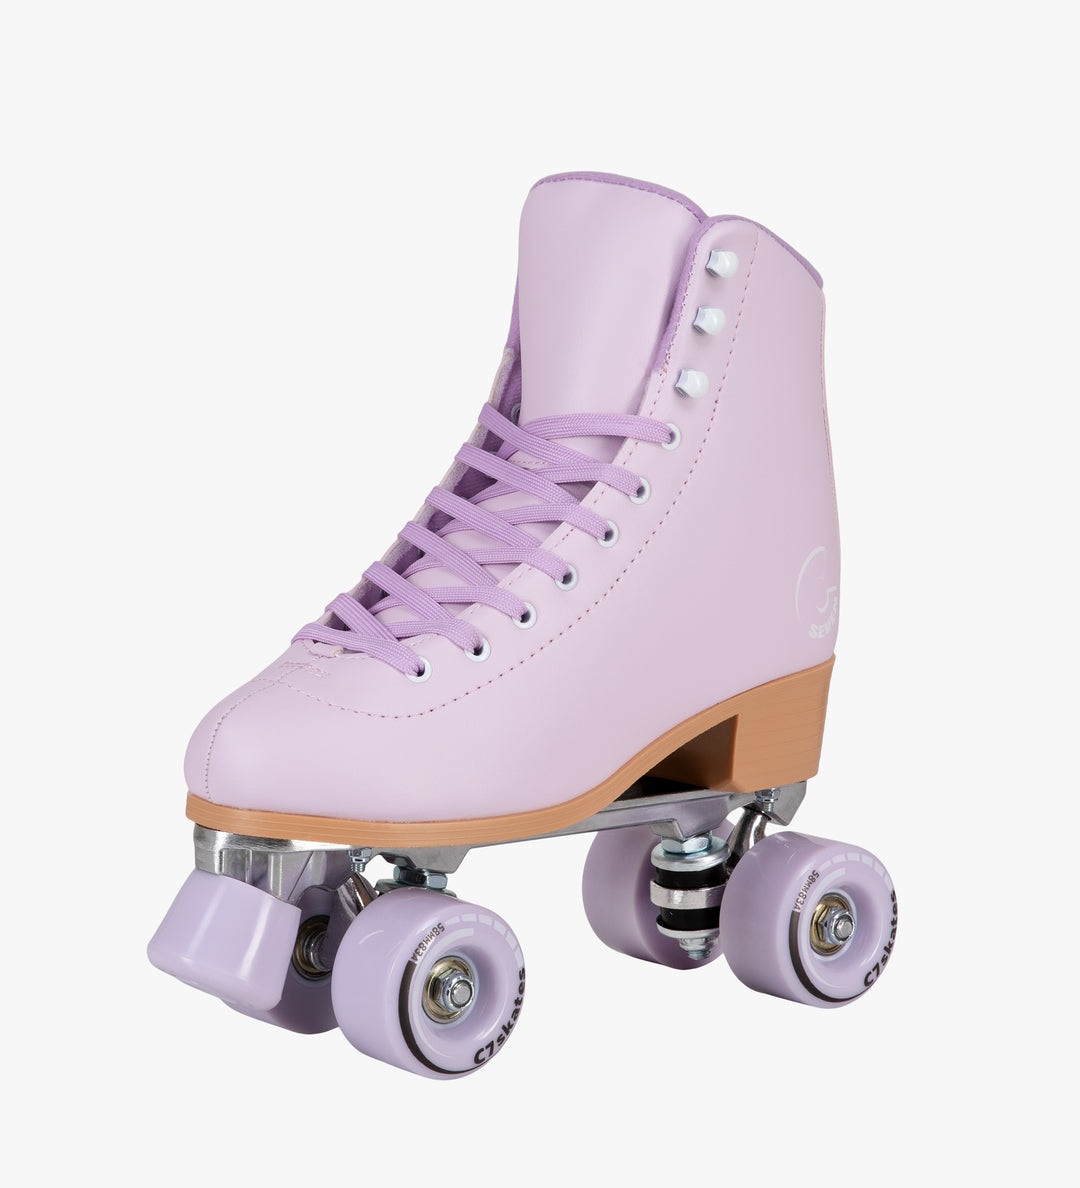 C7skates C7 Sugarplum pastel purple lilac lavender boot quad roller skates for women girls men with outdoor 58mm wheels 